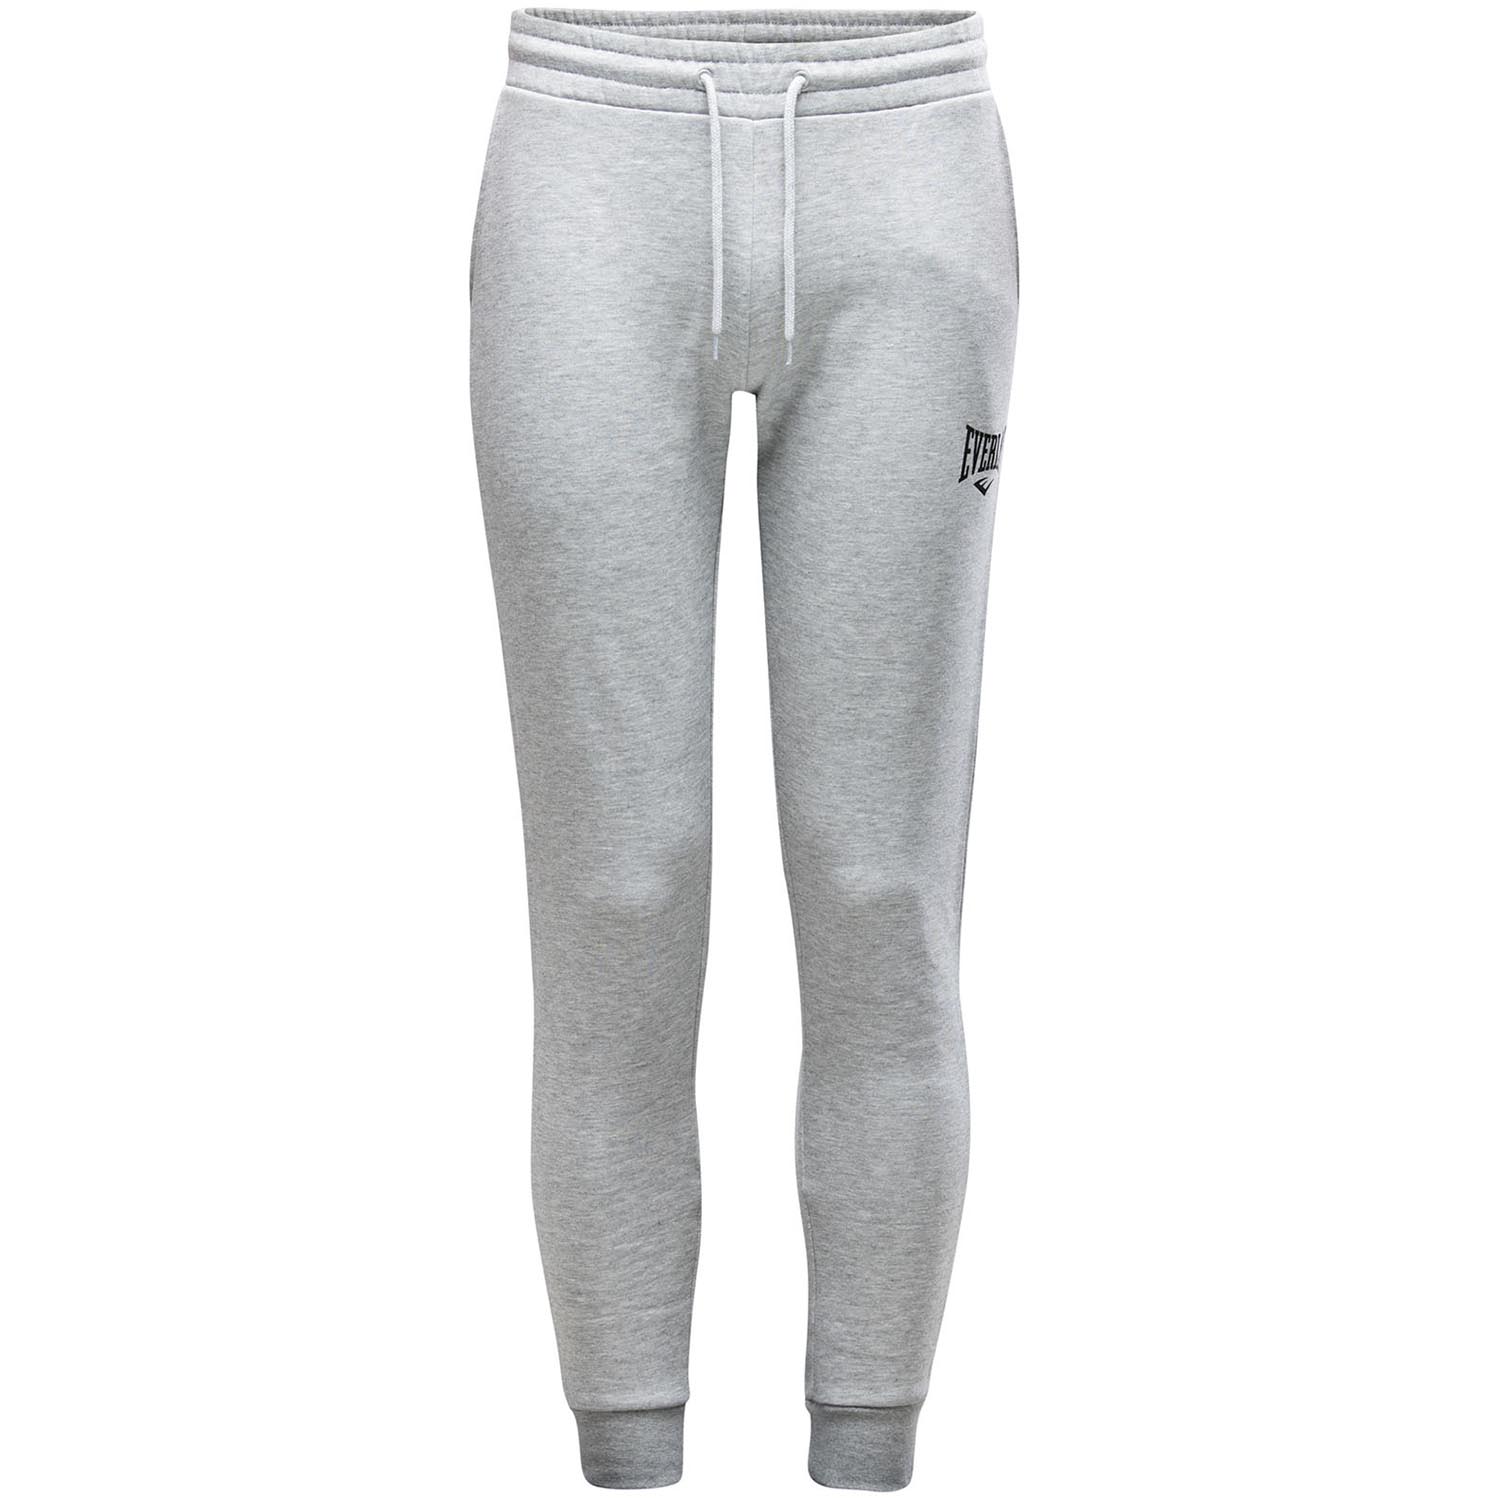 Everlast Jogging Pants, Audubon, grey, XL